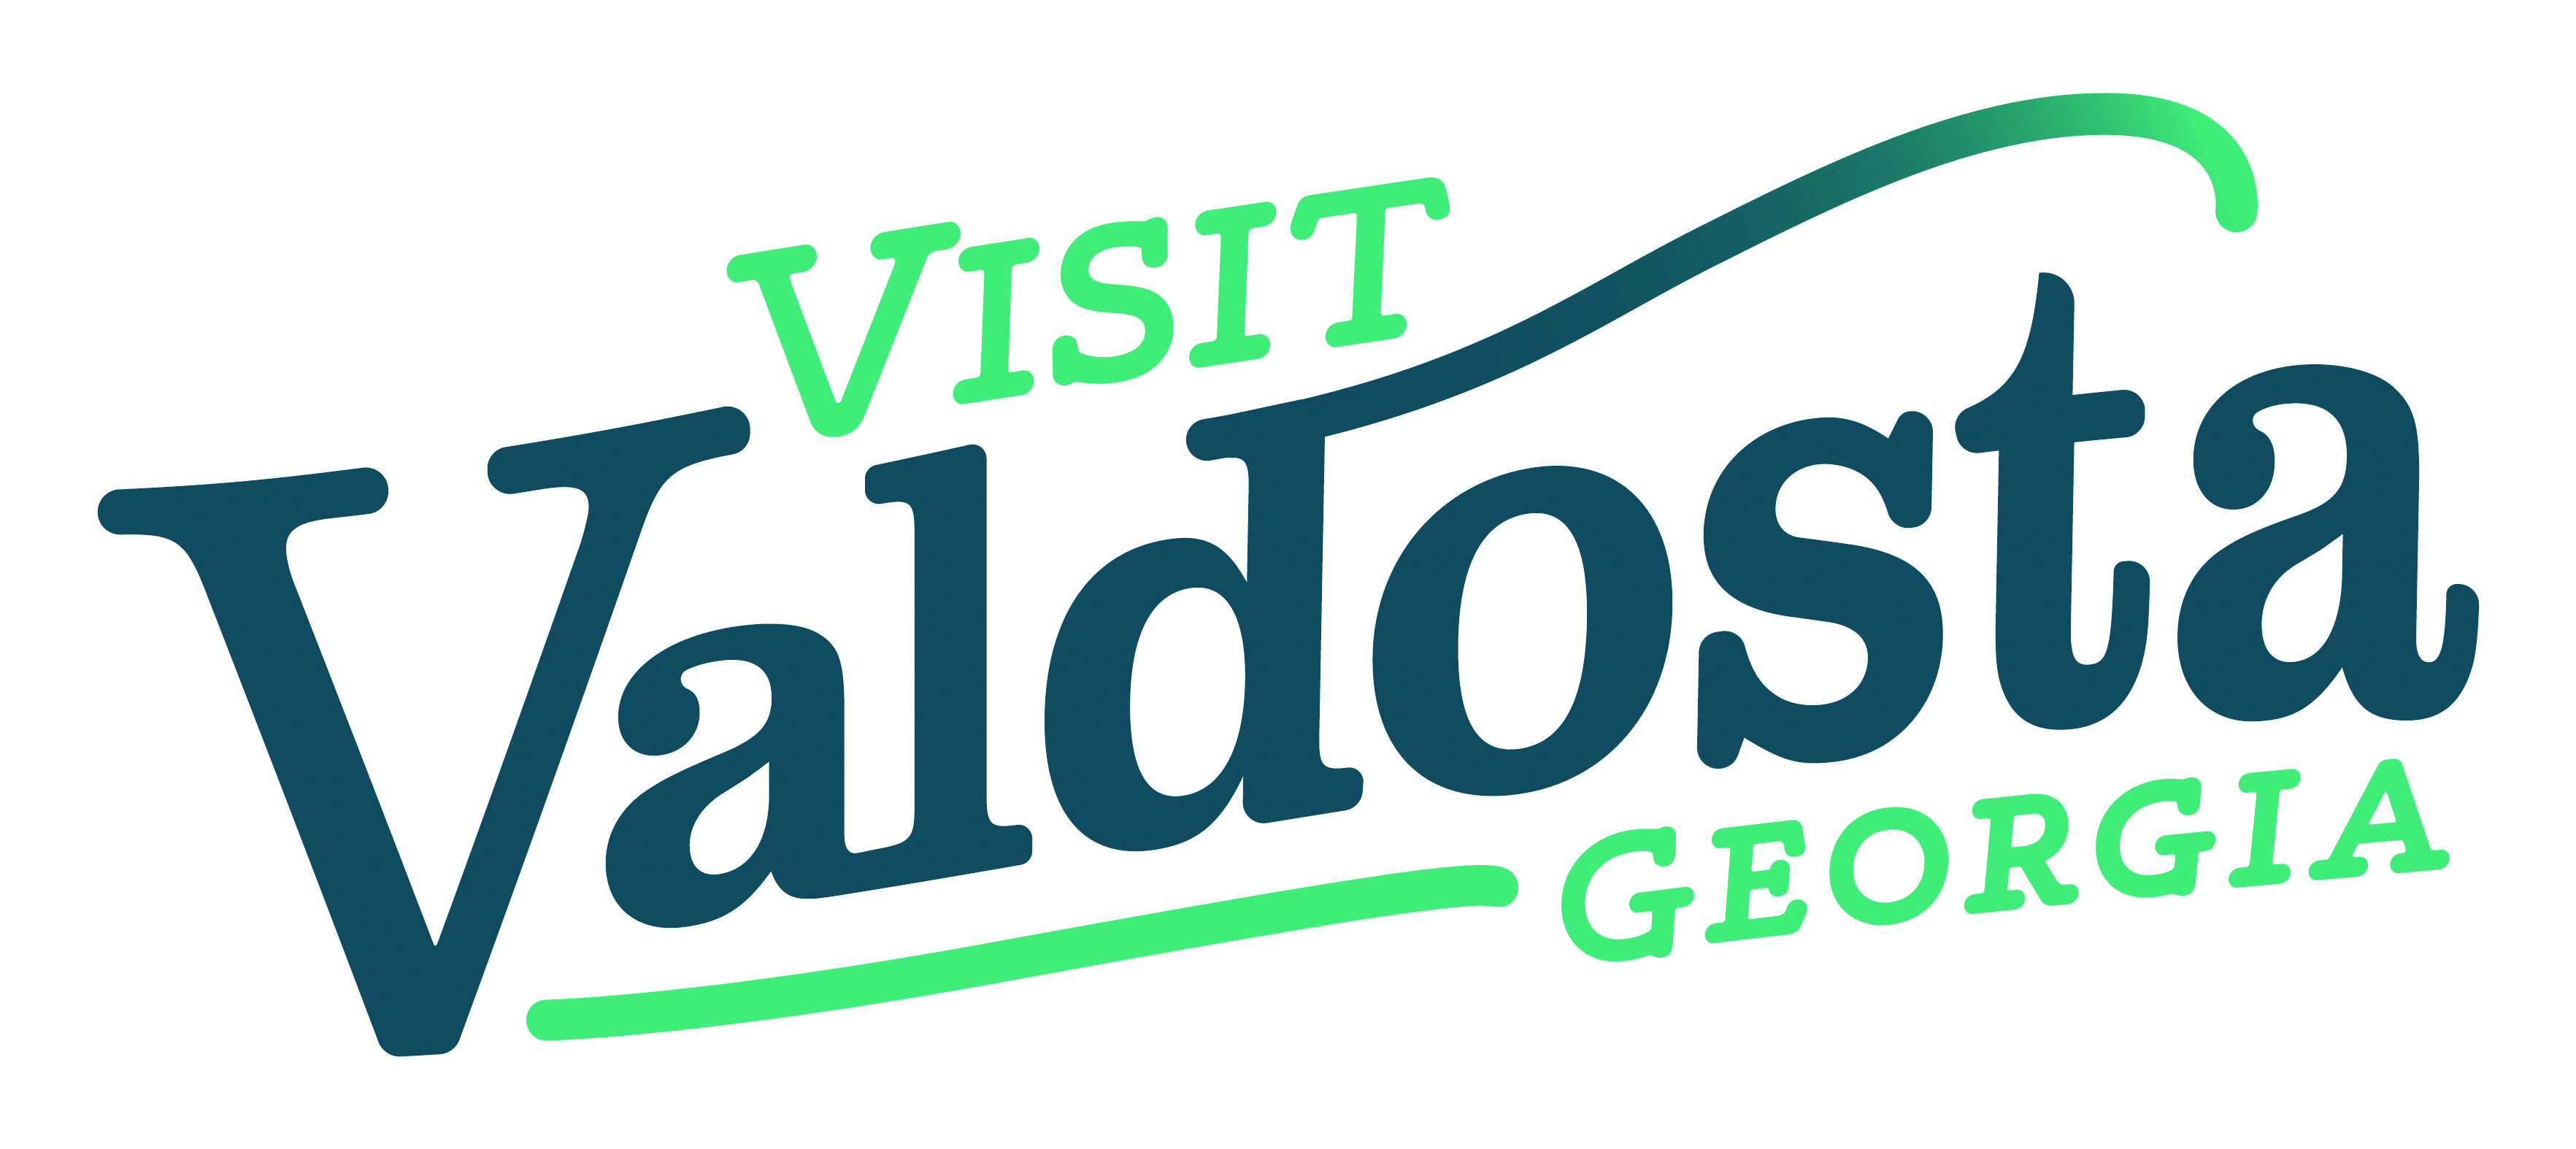 Visit Valdosta Georgia logo